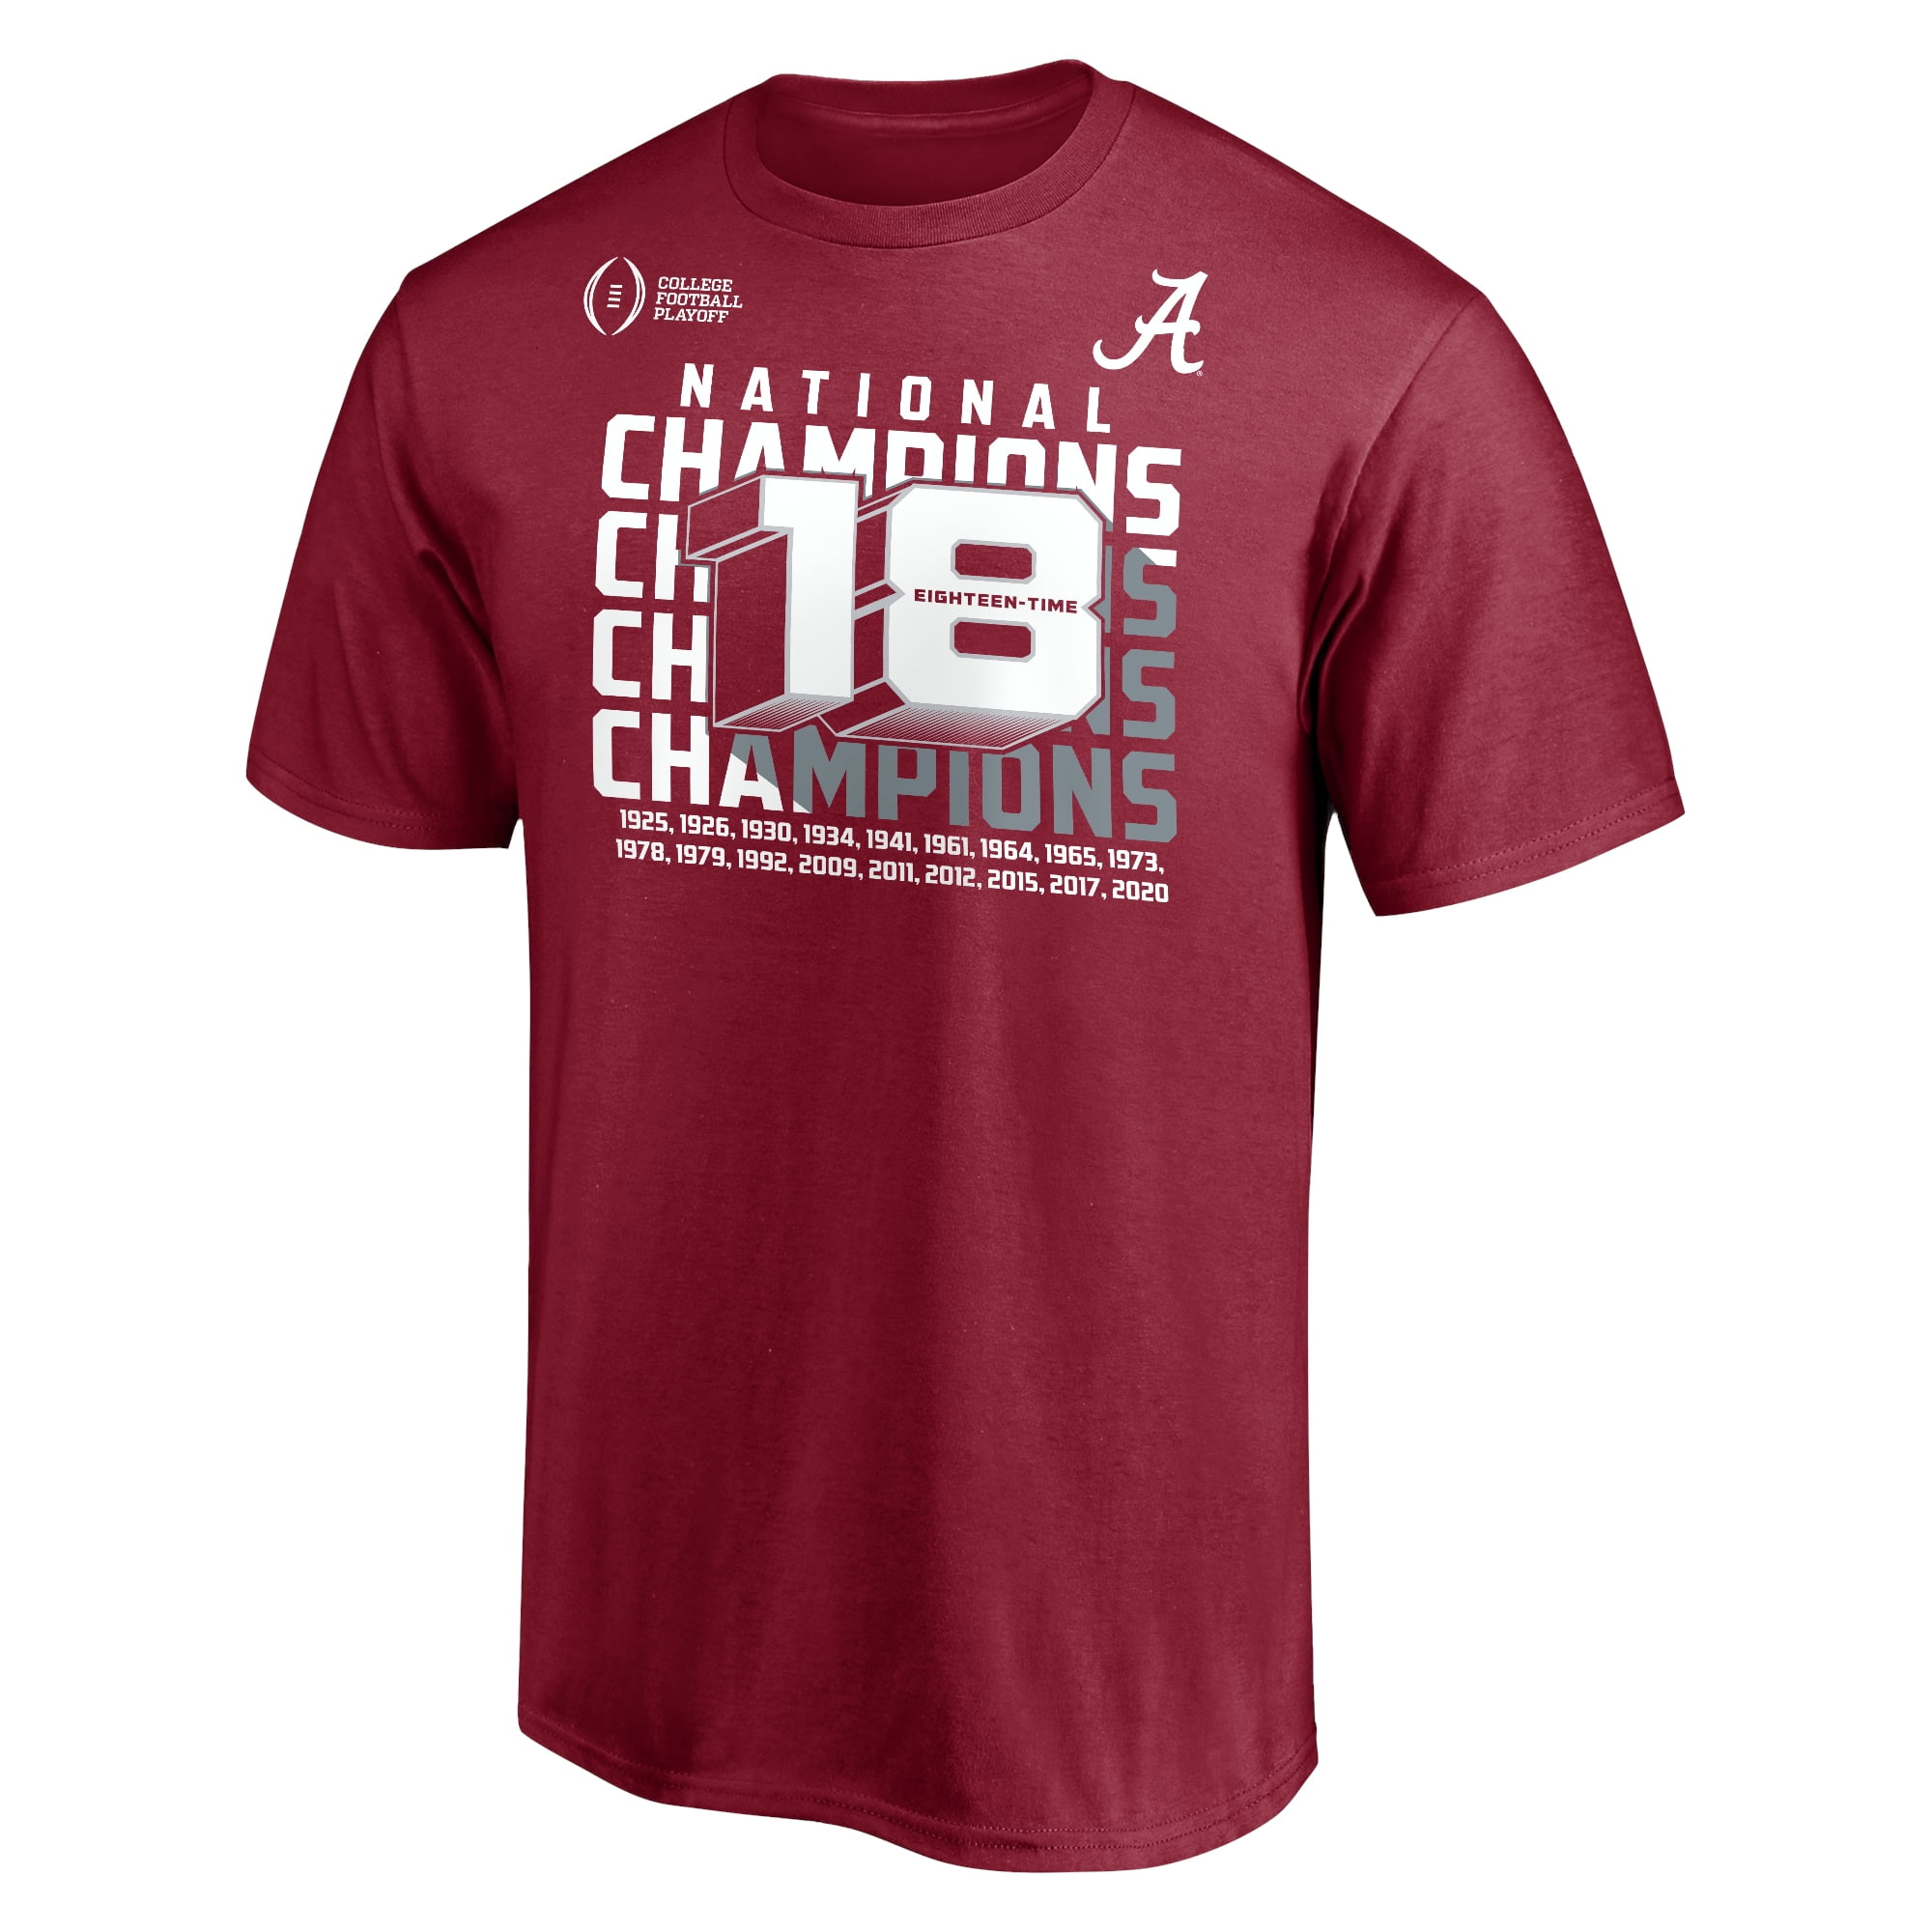 t-shirt Alabama Crimson Text National Champs CHAMPION 5 sizes Pink Tide 2015 